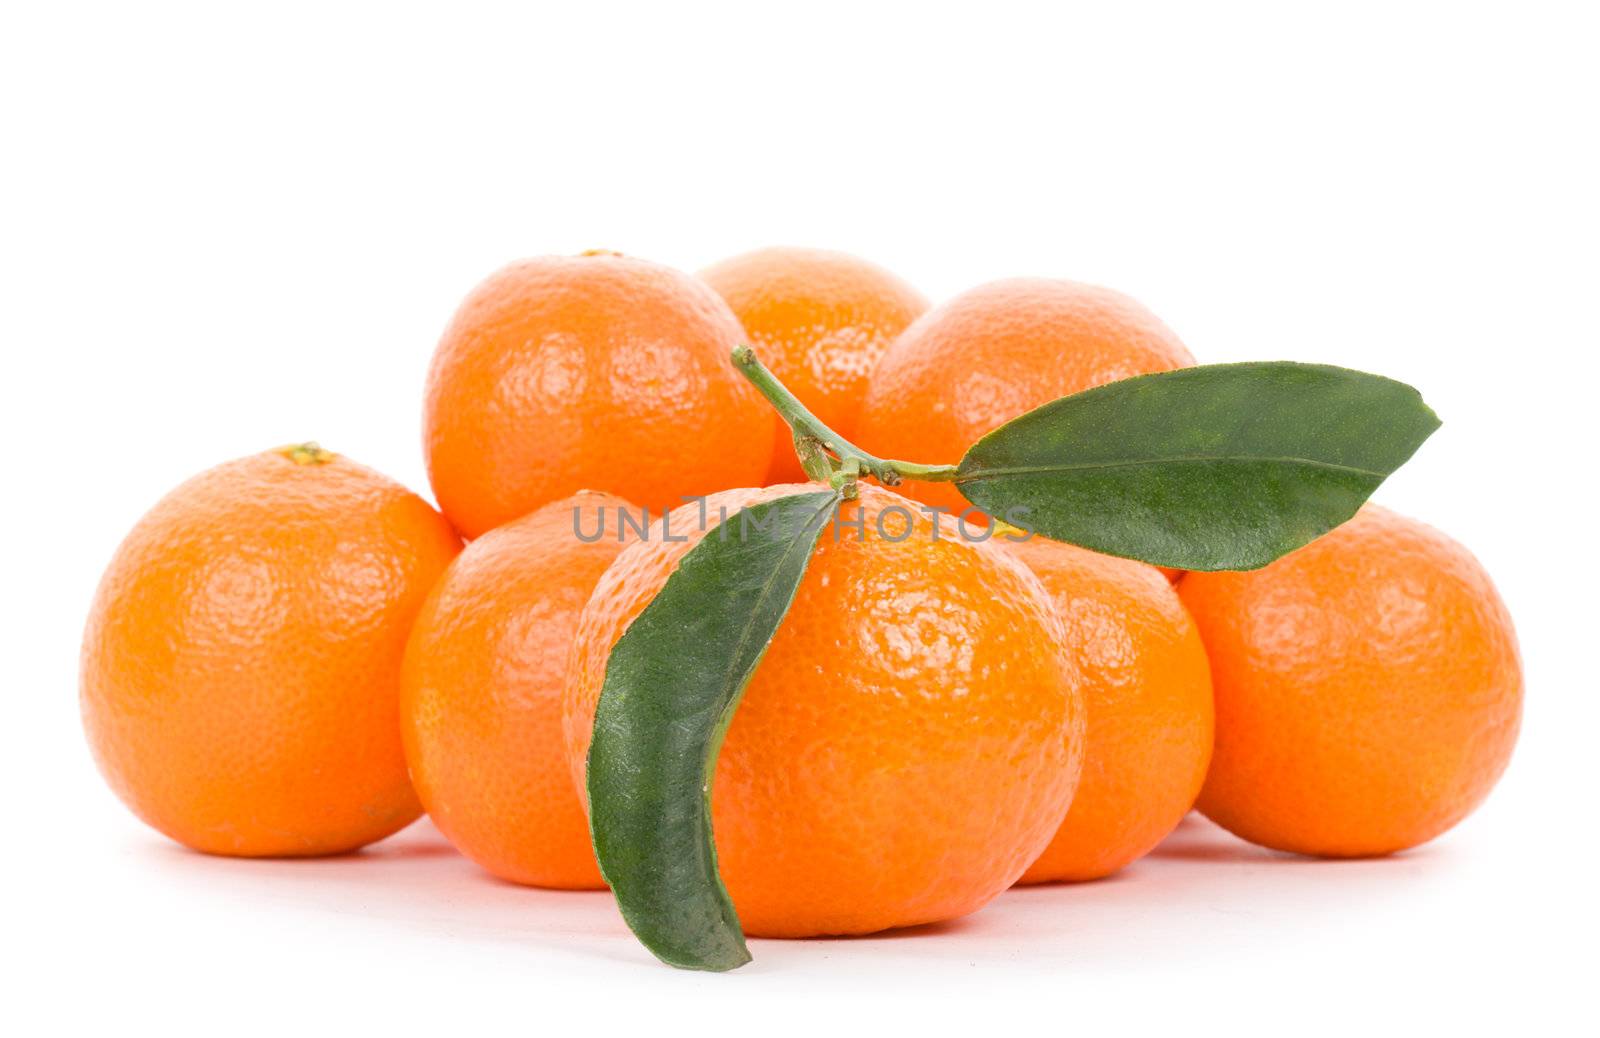  tangerines by Alekcey